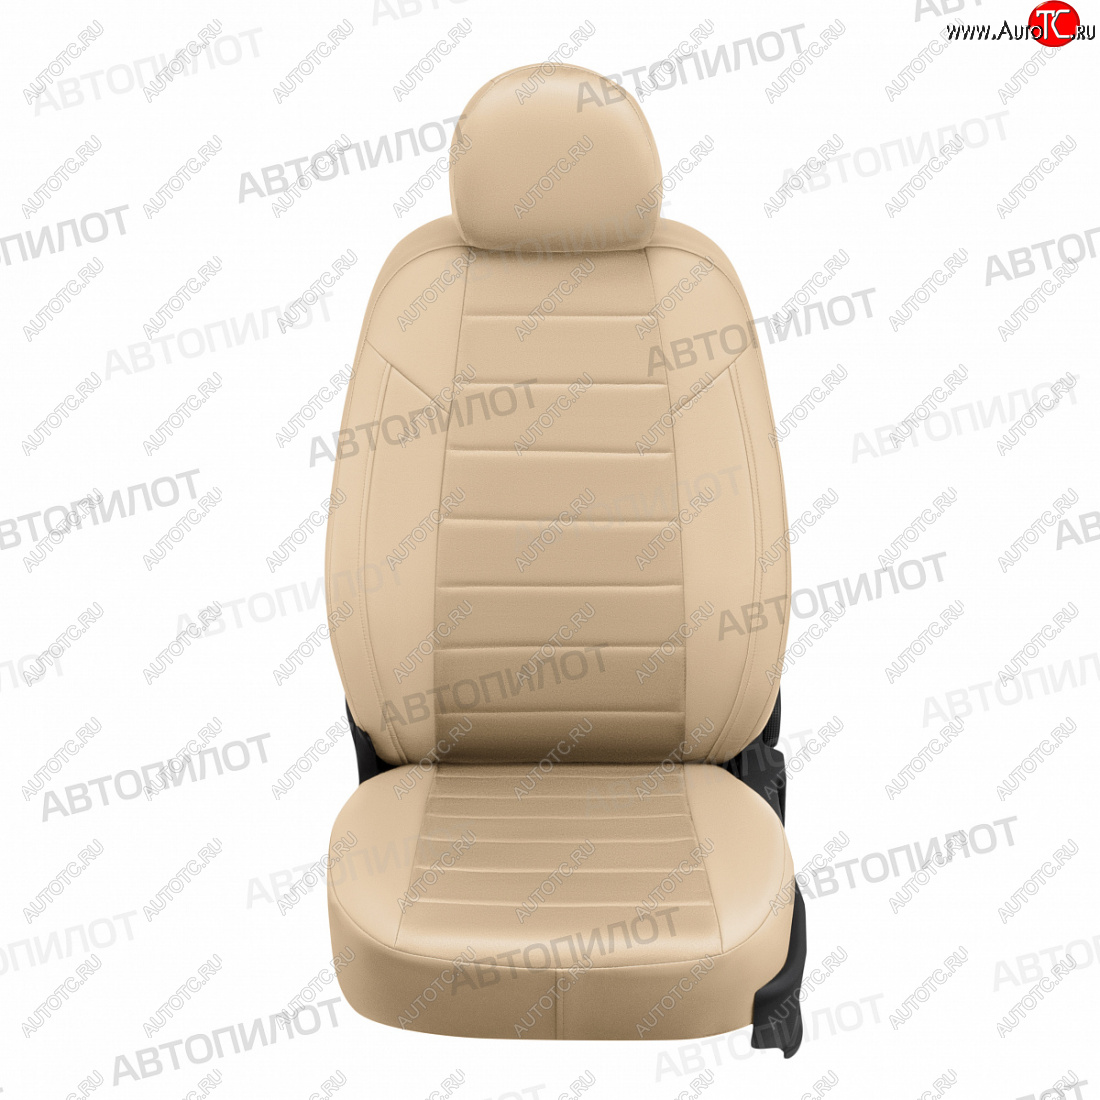 17 549 р. Чехлы сидений (экокожа/алькантара, 7 мест) Автопилот Hyundai Trajet (1999-2008) (бежевый)